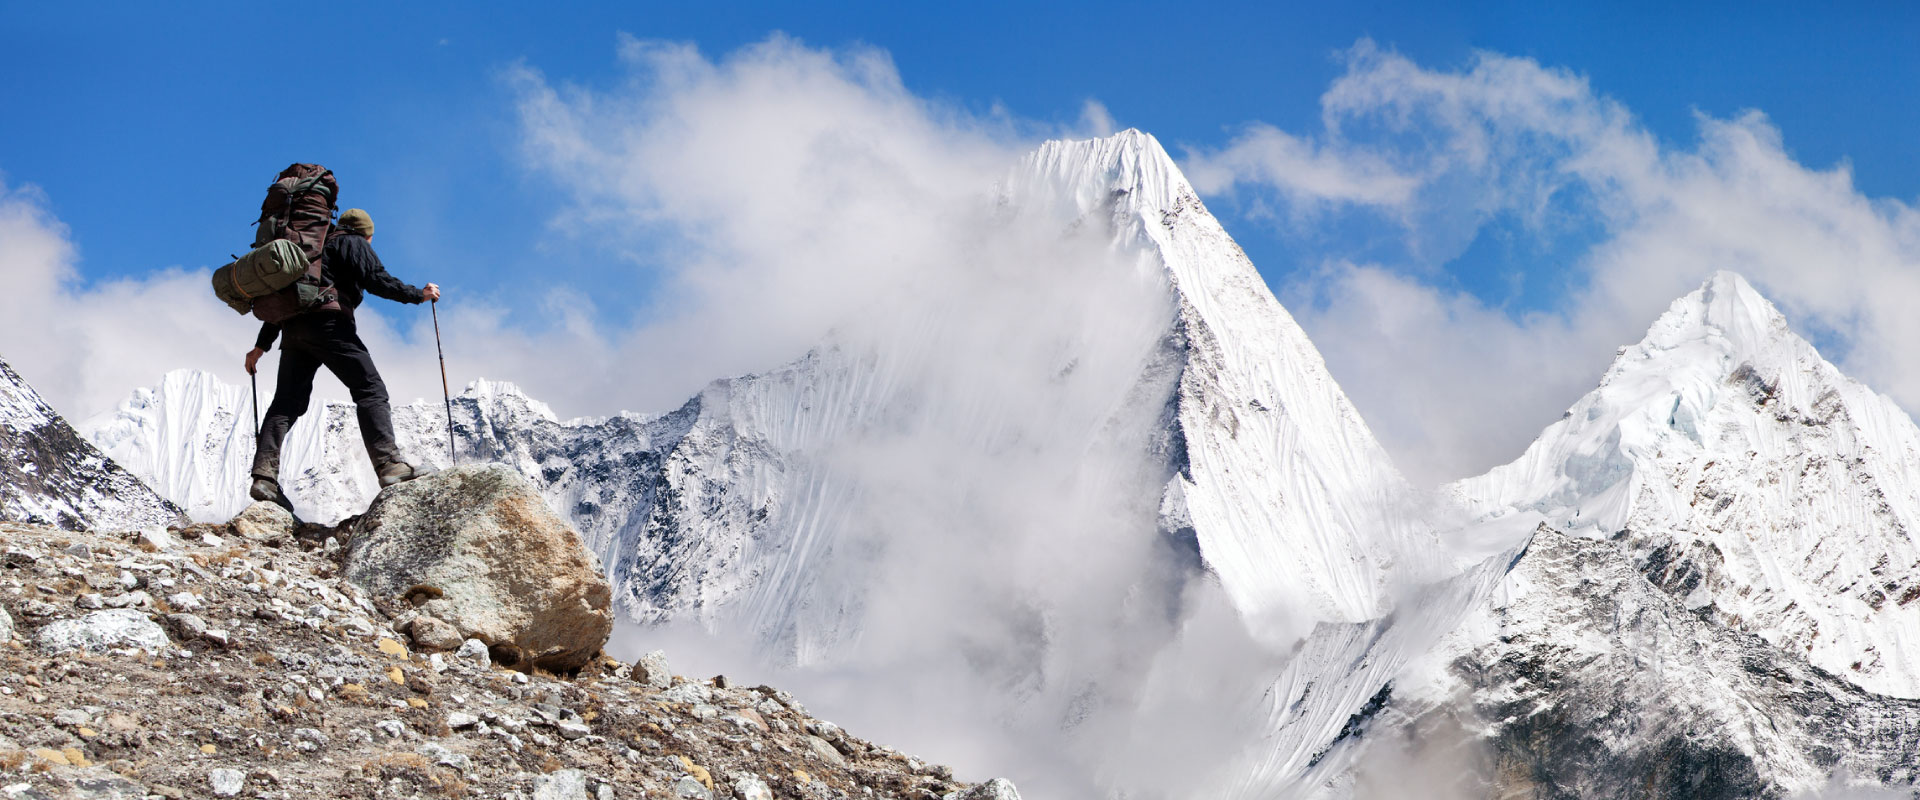 Climber overlooking Mt. Everest